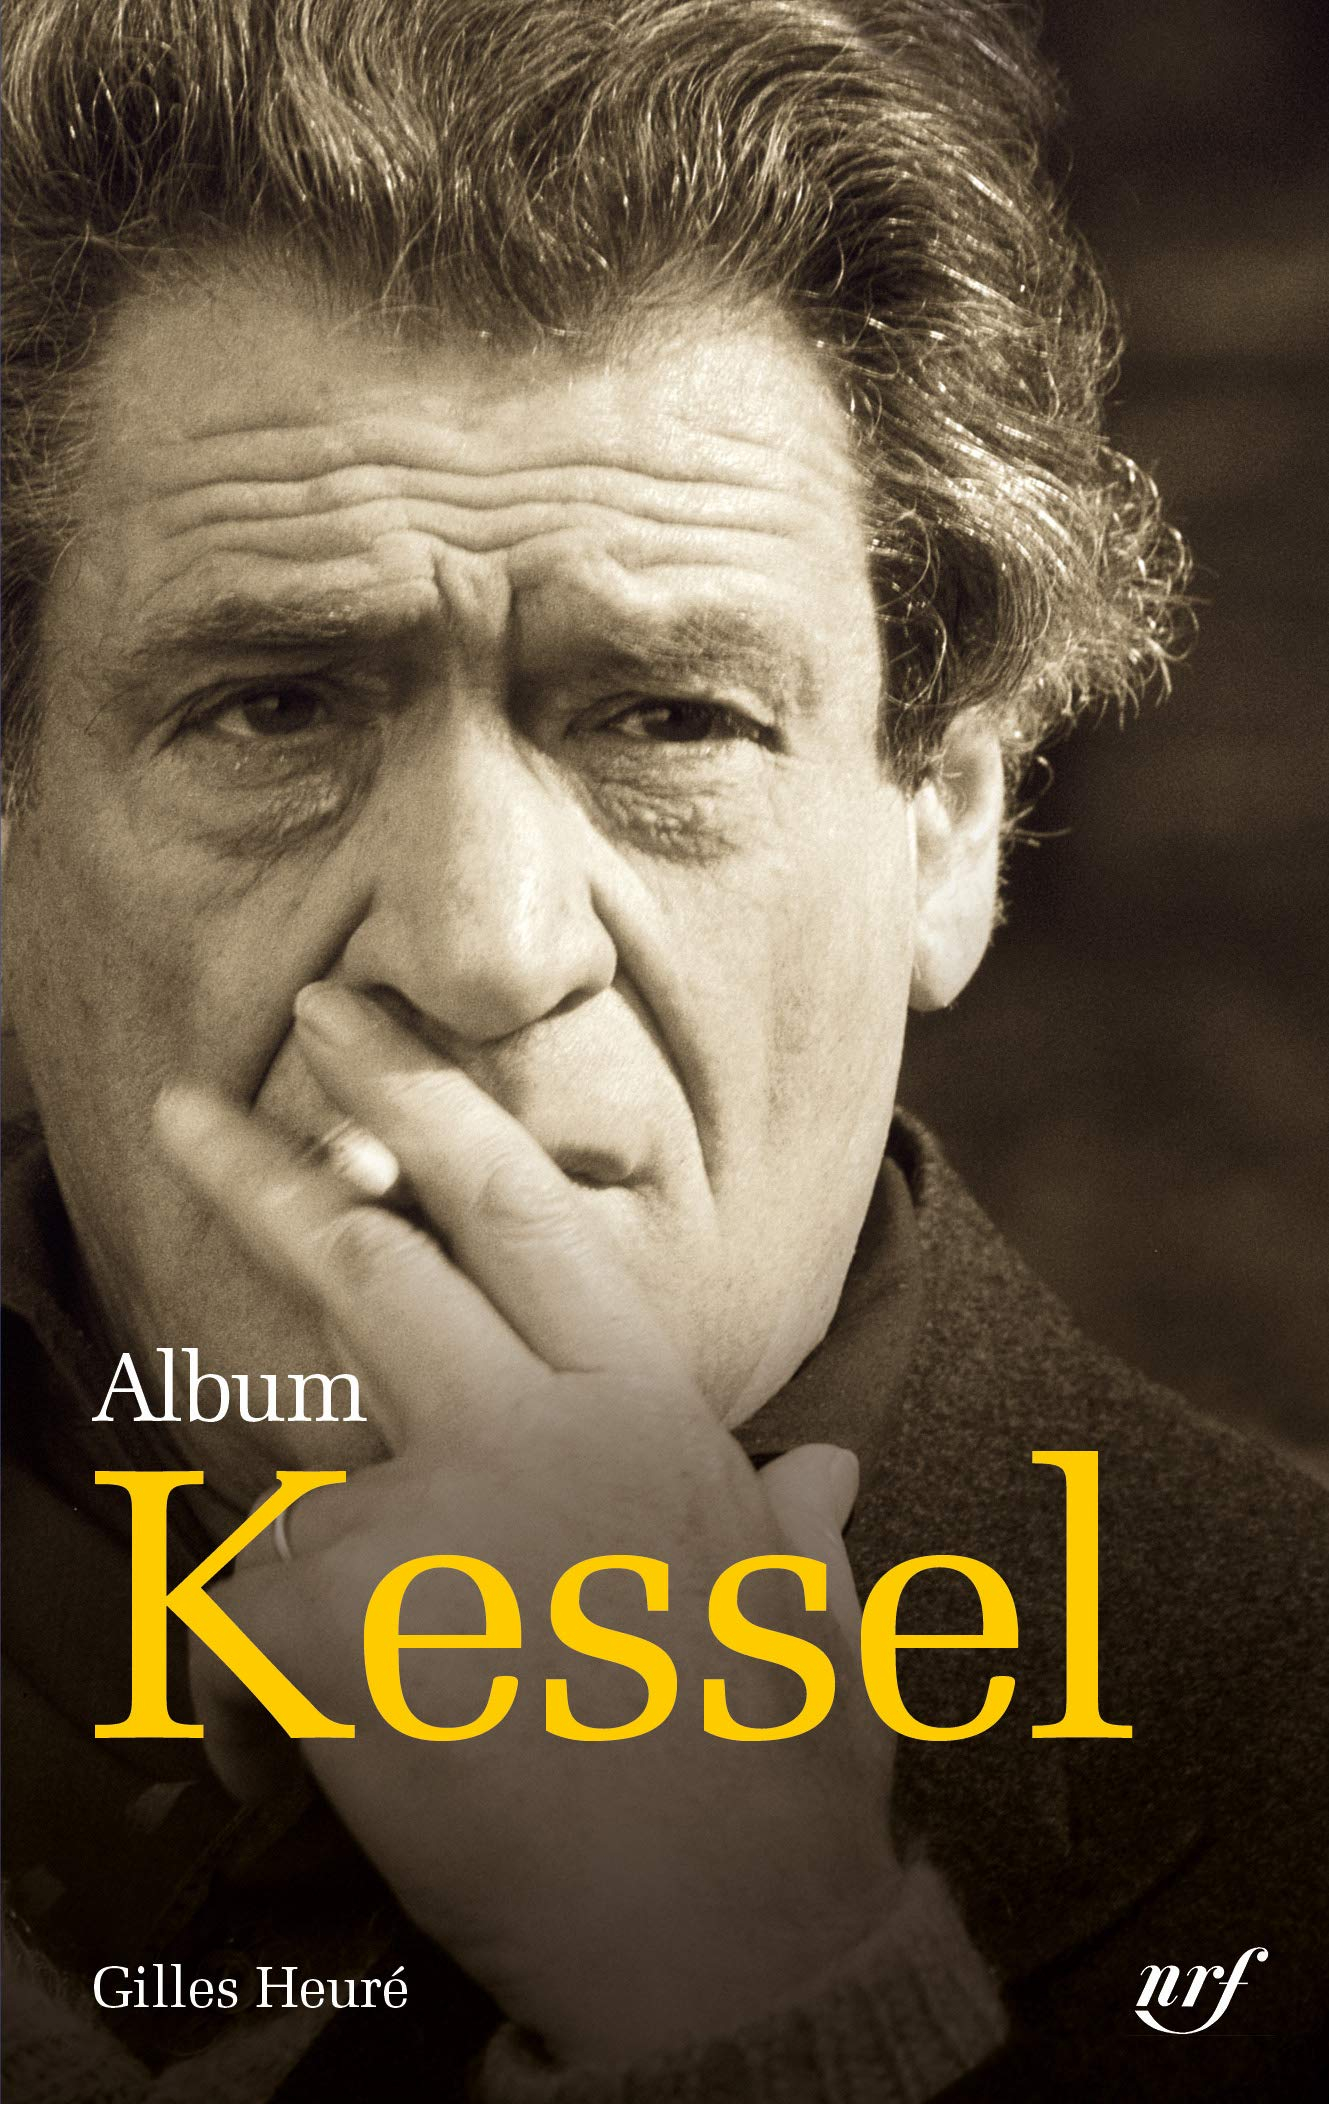 Album Joseph Kessel: Iconographie commentée